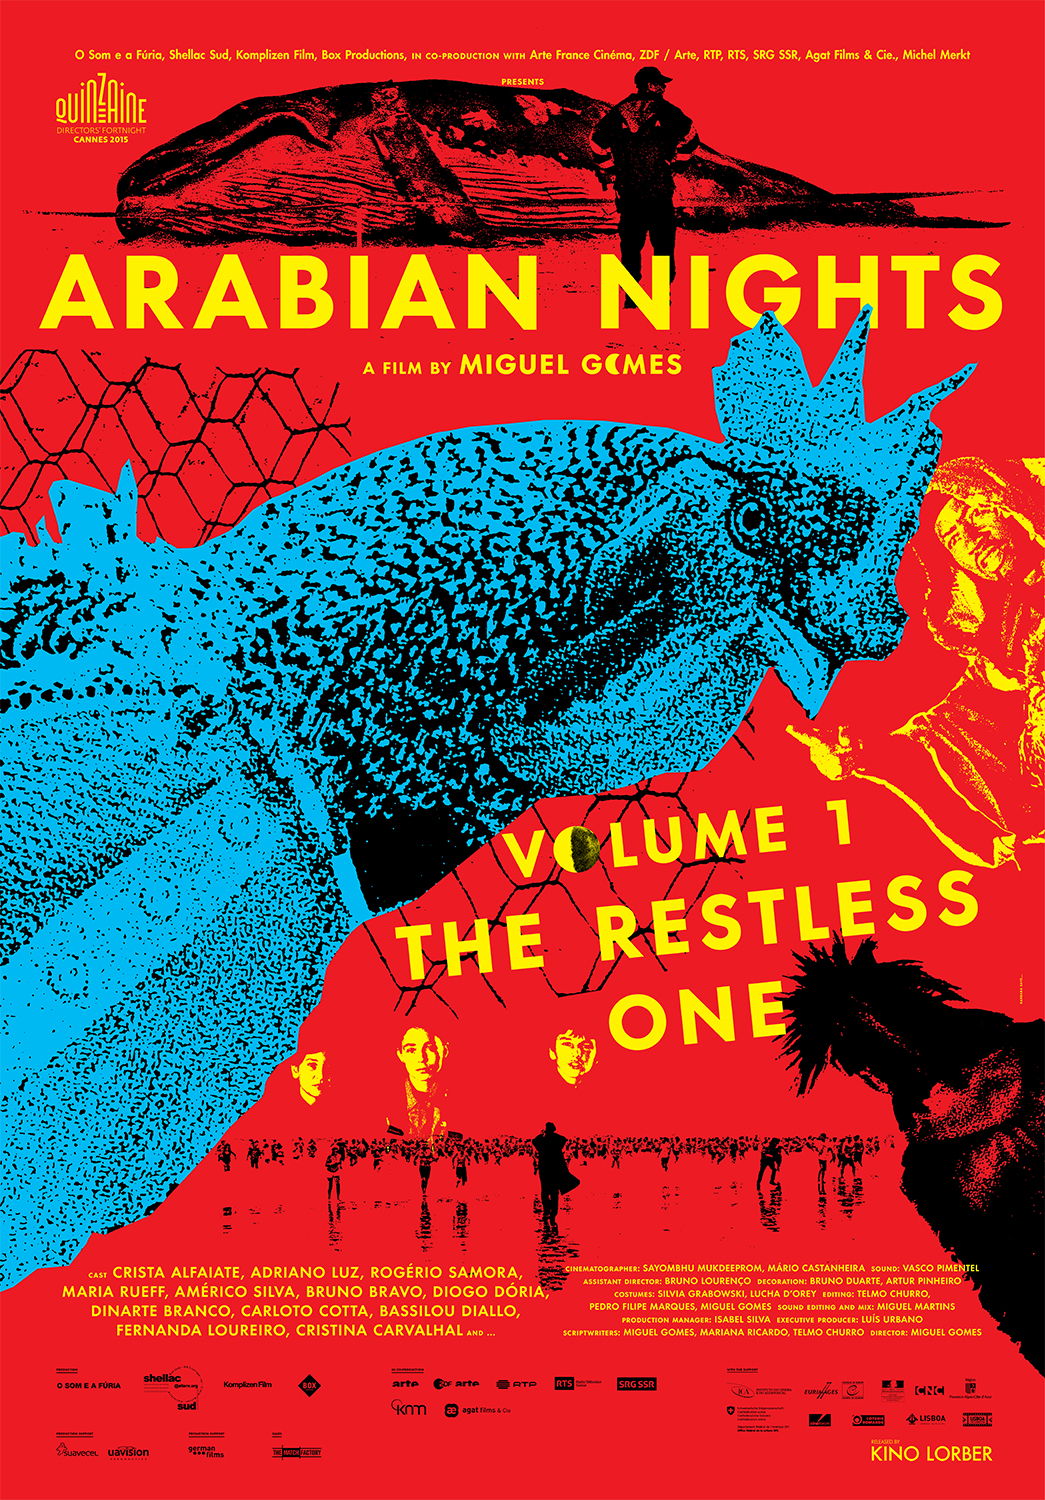 ARABIAN NIGHTS: VOLUME 1 THE RESTLESS ONE